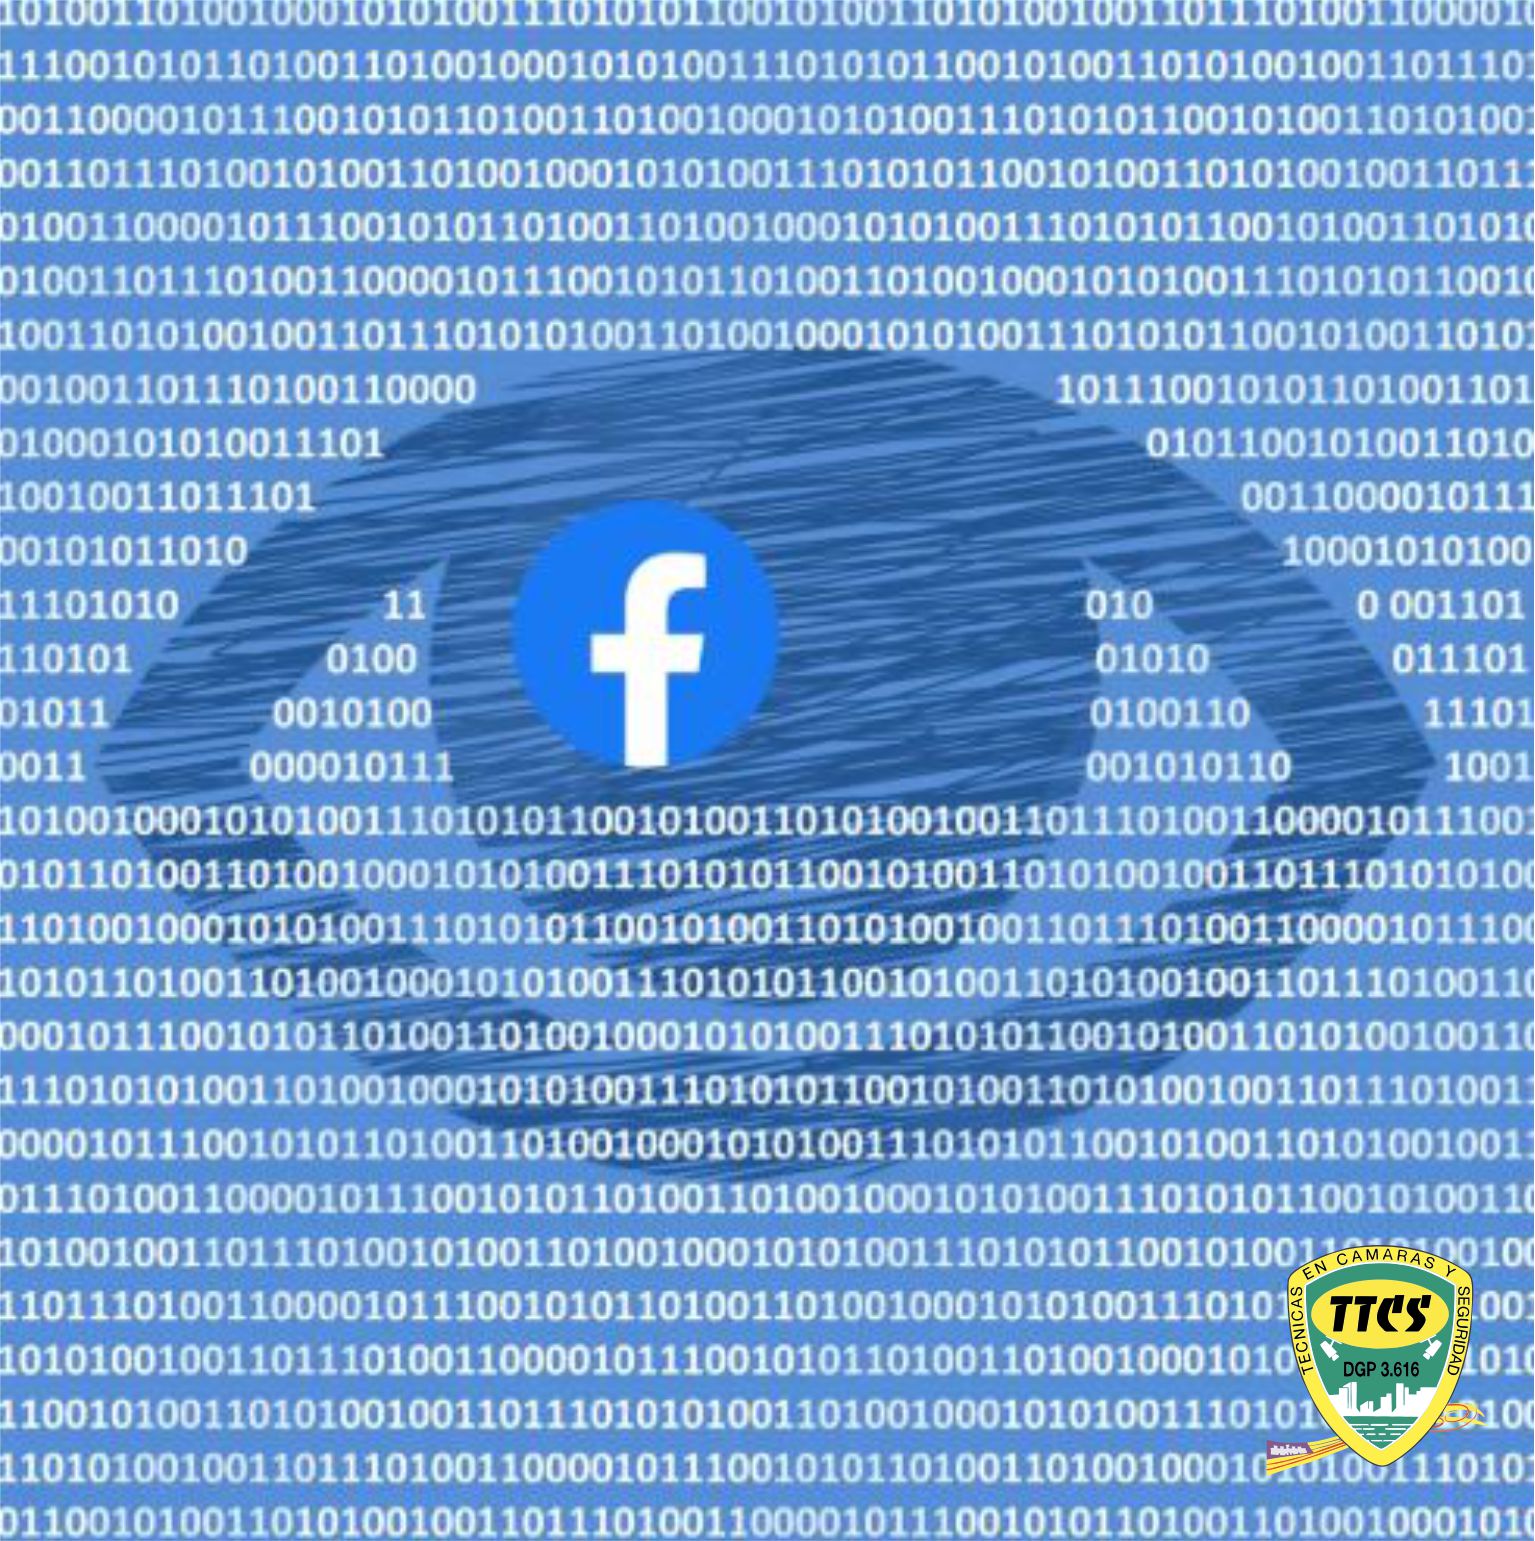 TTCS - Protección de datos - Facebook